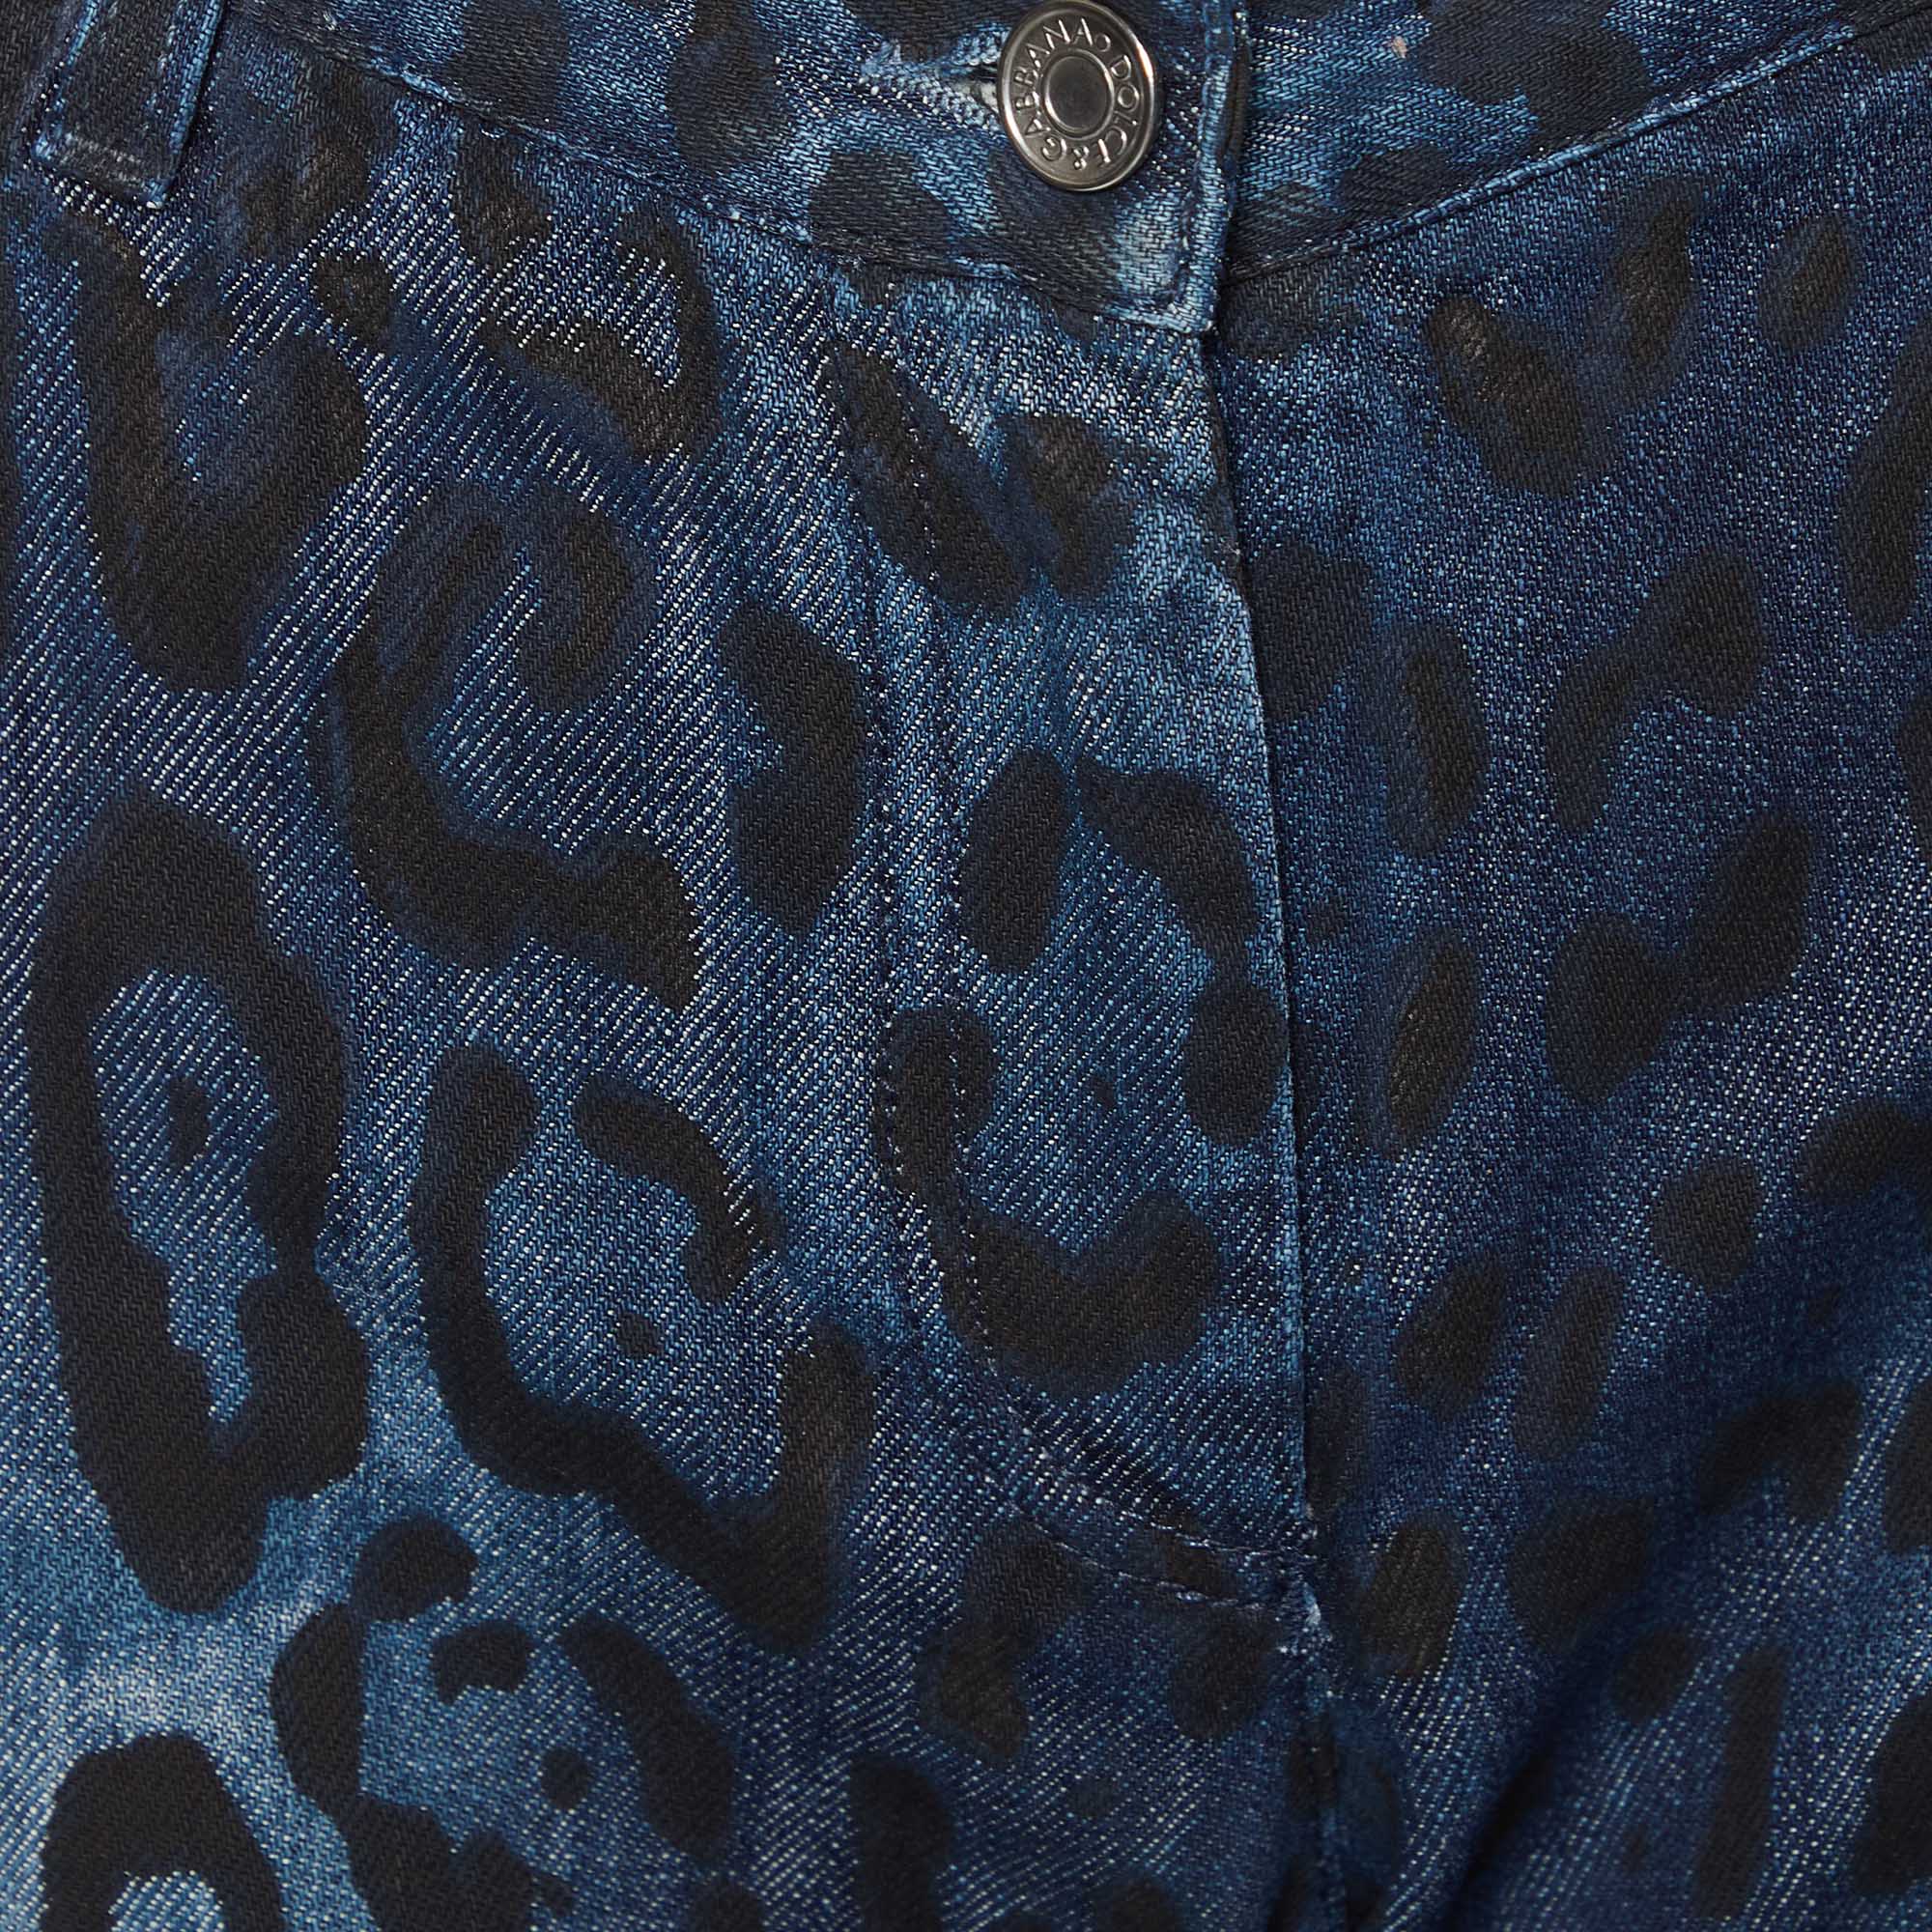 Dolce & Gabbana Navy Blue Animal Printed Denim Straight Leg Jeans L